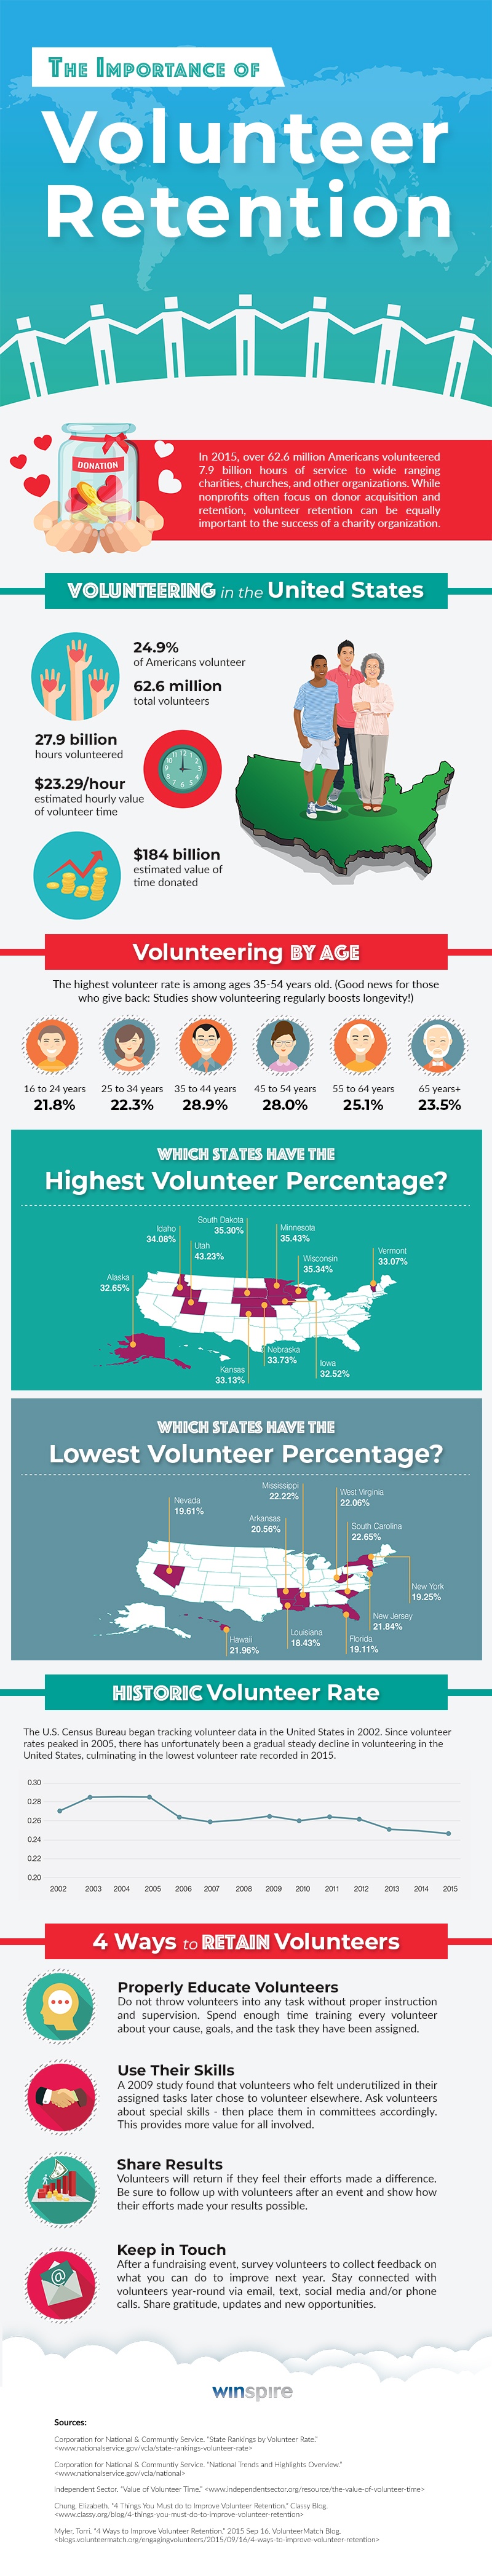 winspire-volunteer-retention-infographic